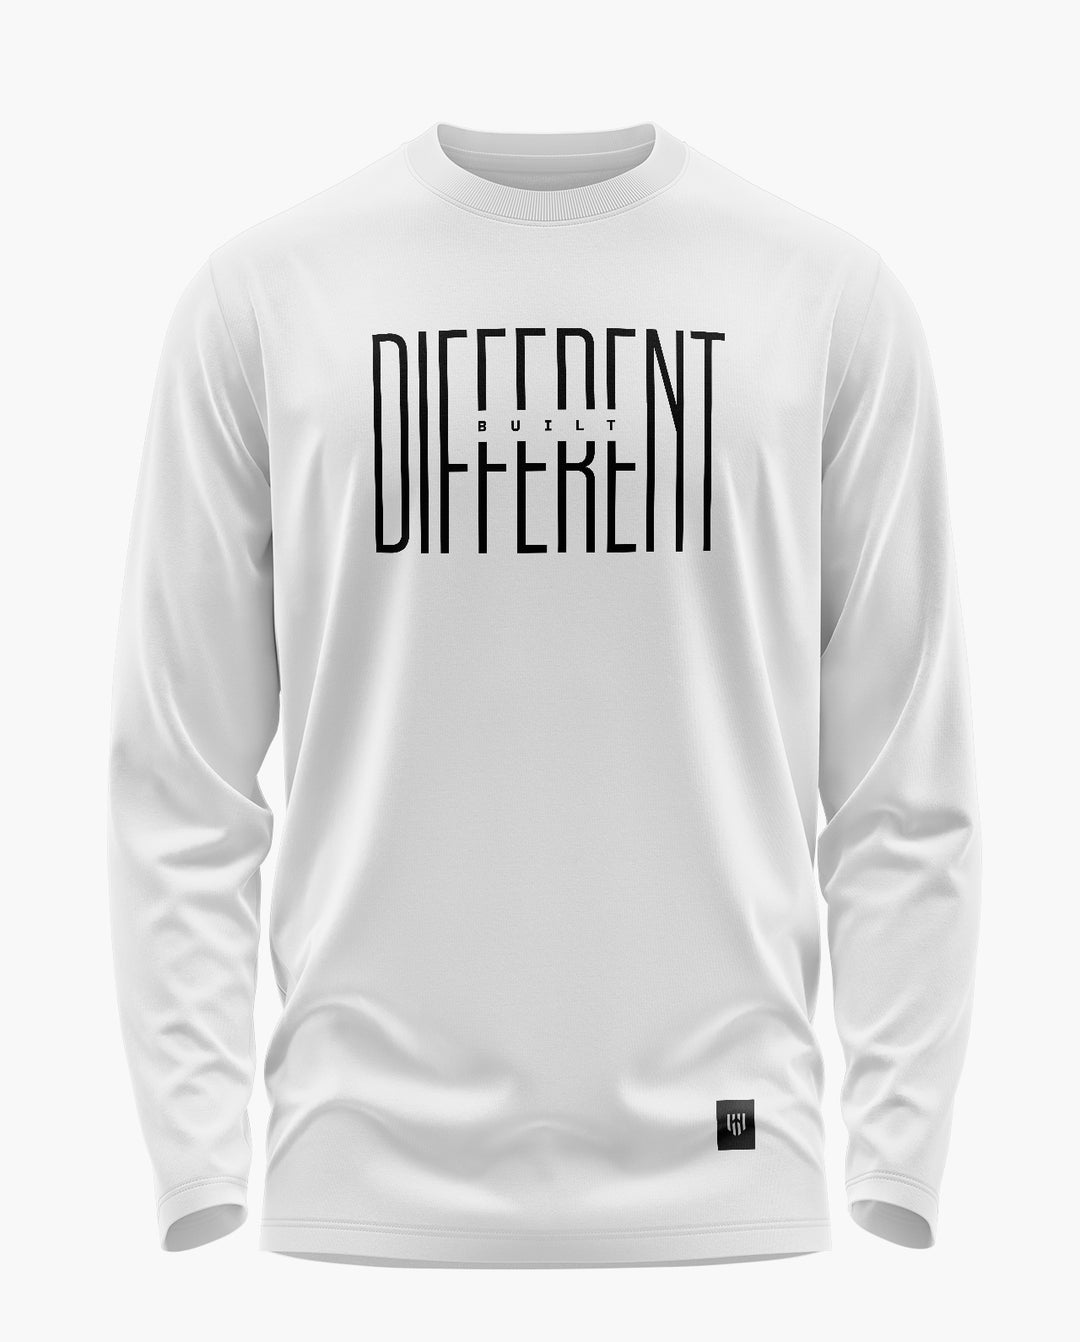 BUILT DIFFERENT Full Sleeve T-Shirt